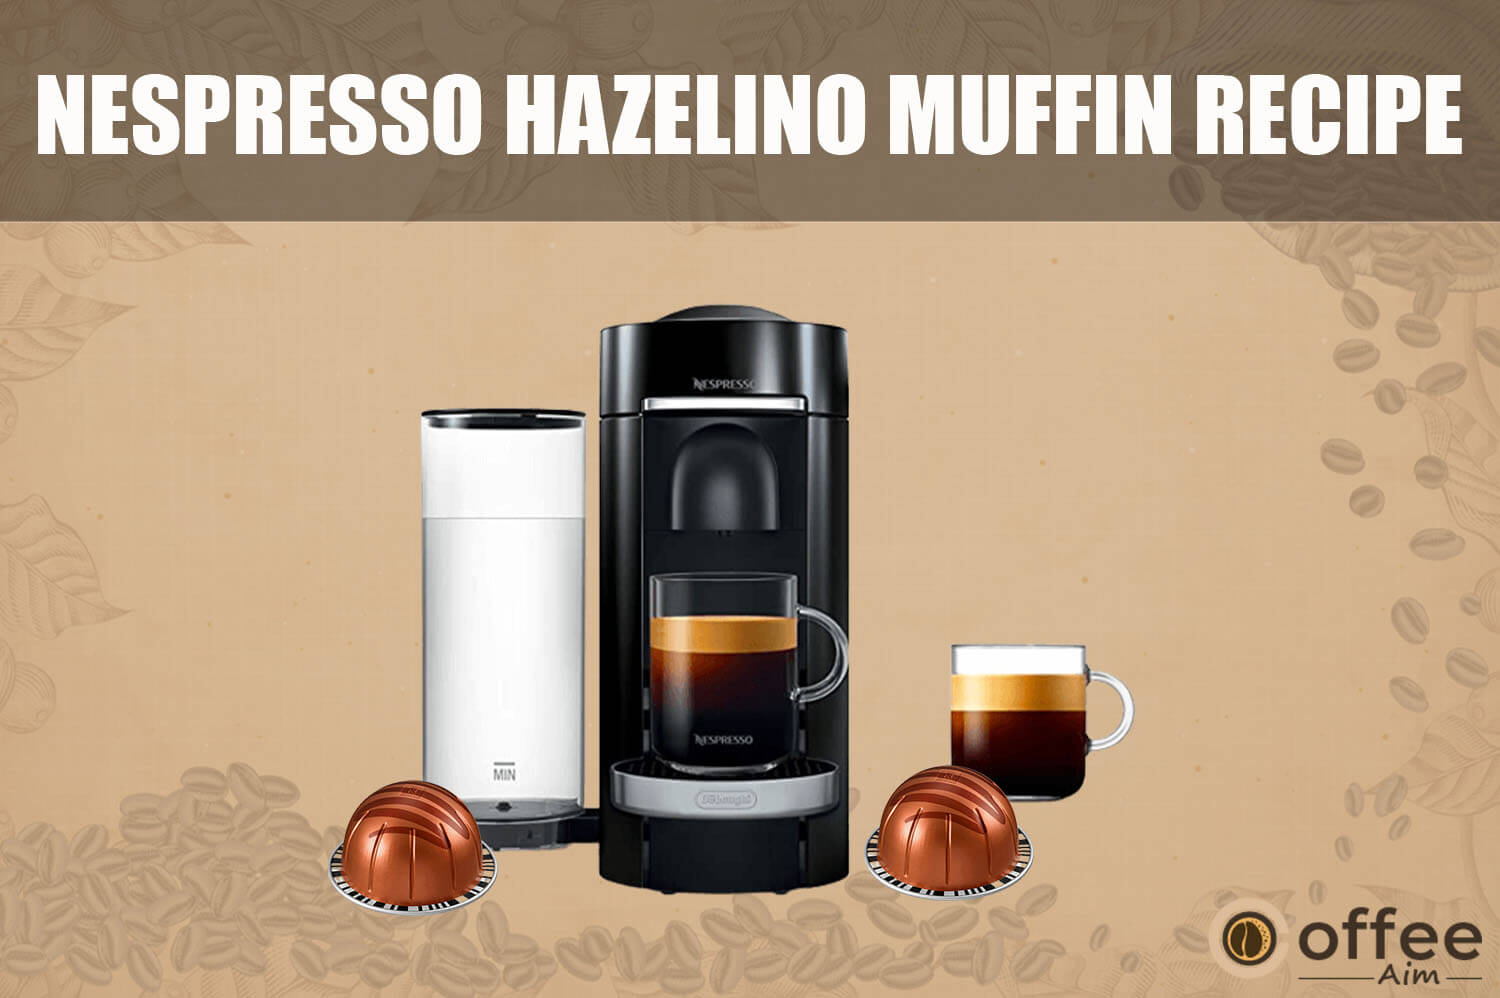 Featured image for the article "Nespresso Hazelino Muffin Recipe"